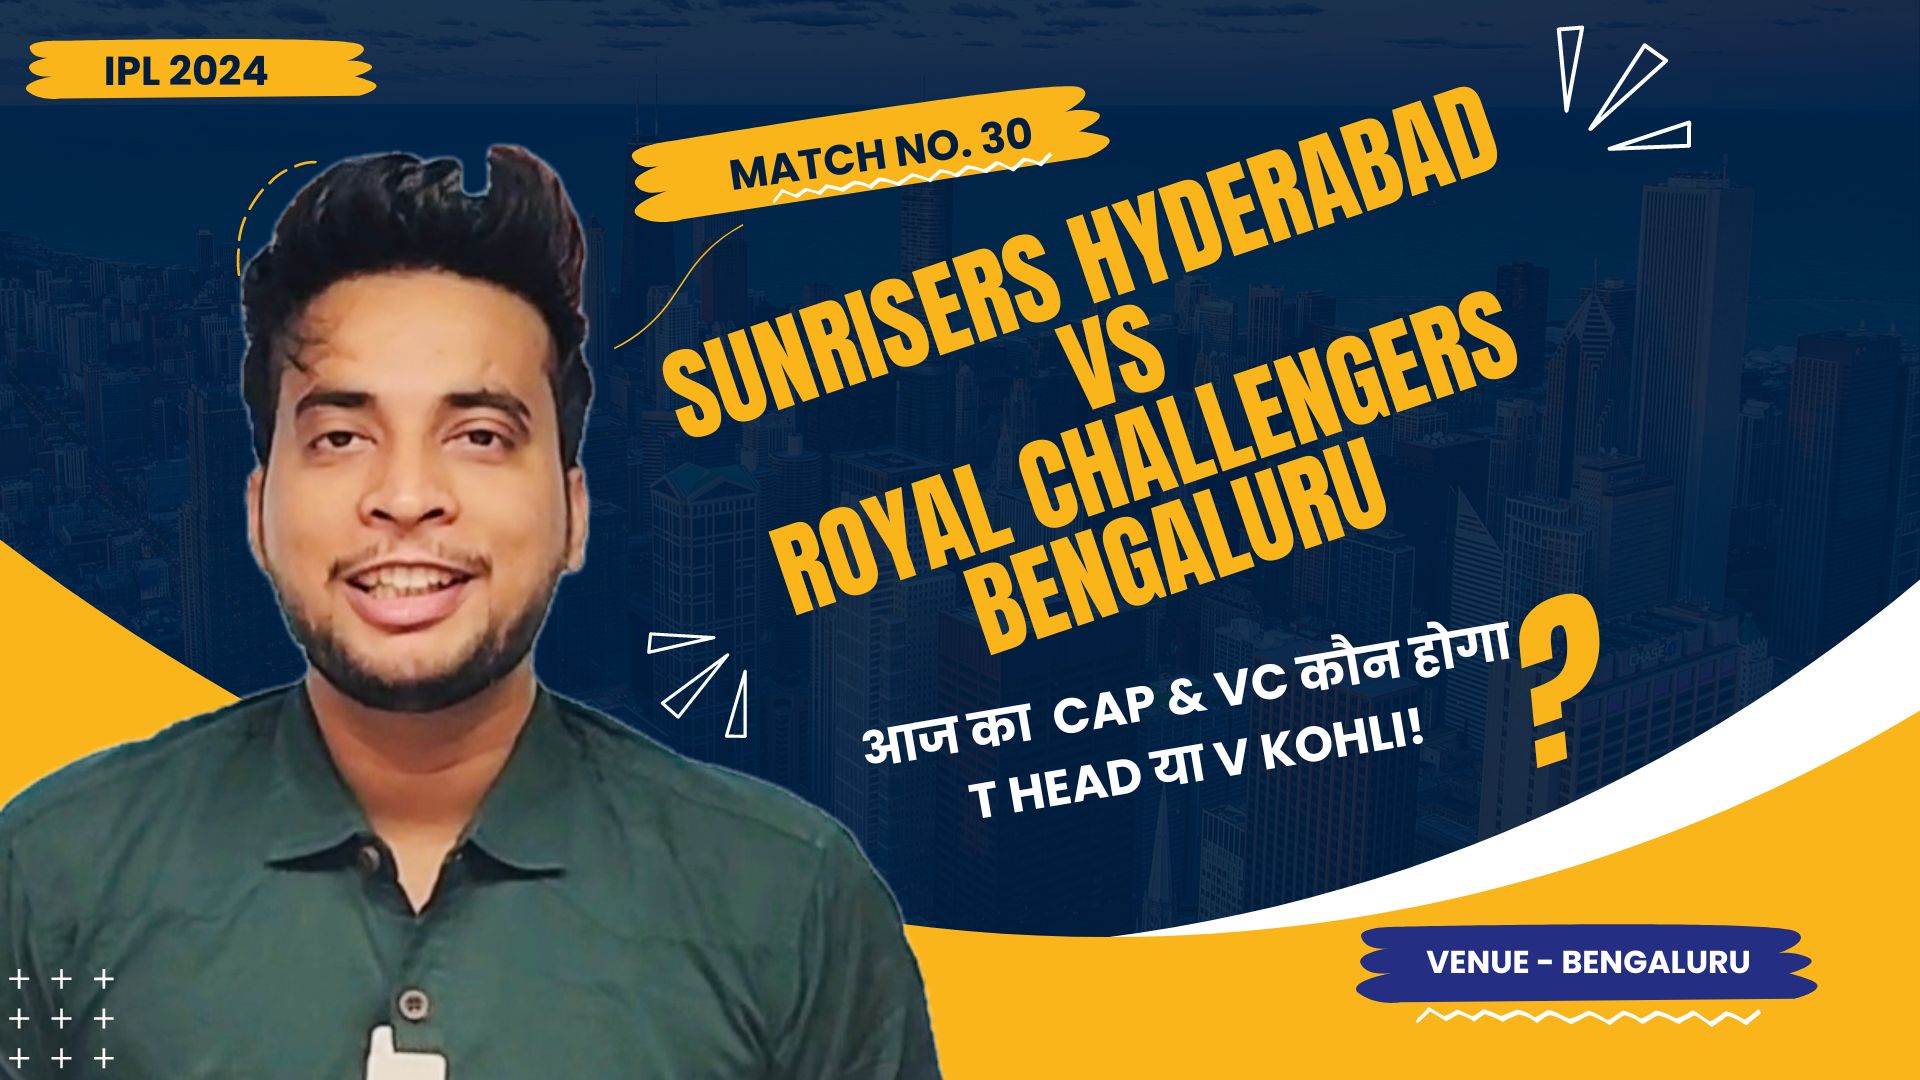 Match 30: Royal Challengers Bengaluru vs Sunrisers Hyderabad | Fantasy Preview